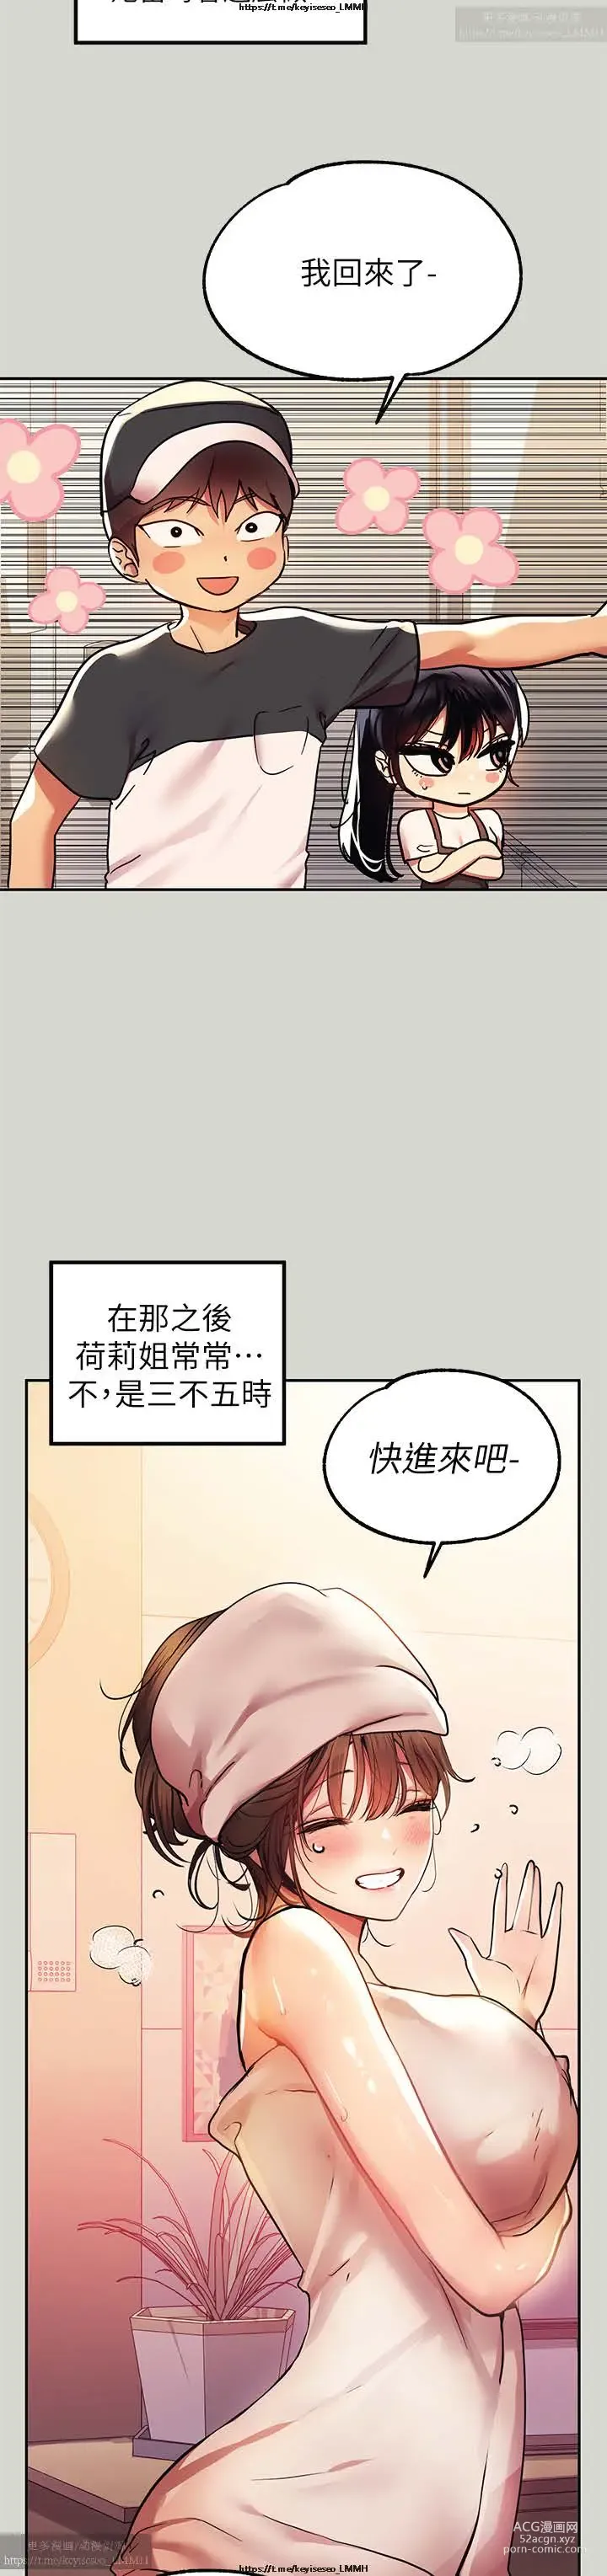 Page 799 of manga 韩漫：富家女姐姐 1-25 官中